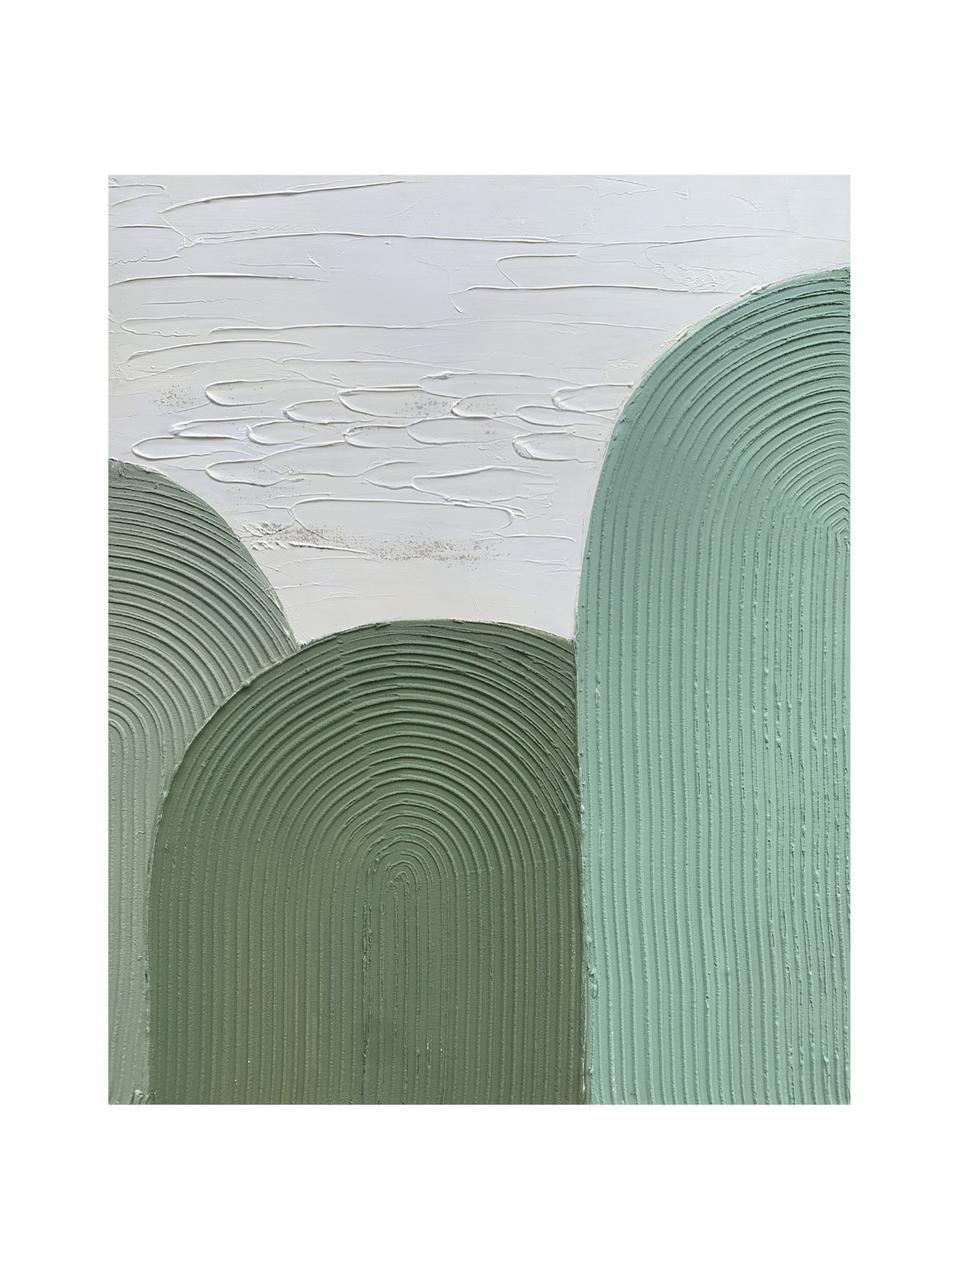 Handgemaltes Leinwandbild Green Curves, Grüntöne, Weiss, B 80 x H 100 cm